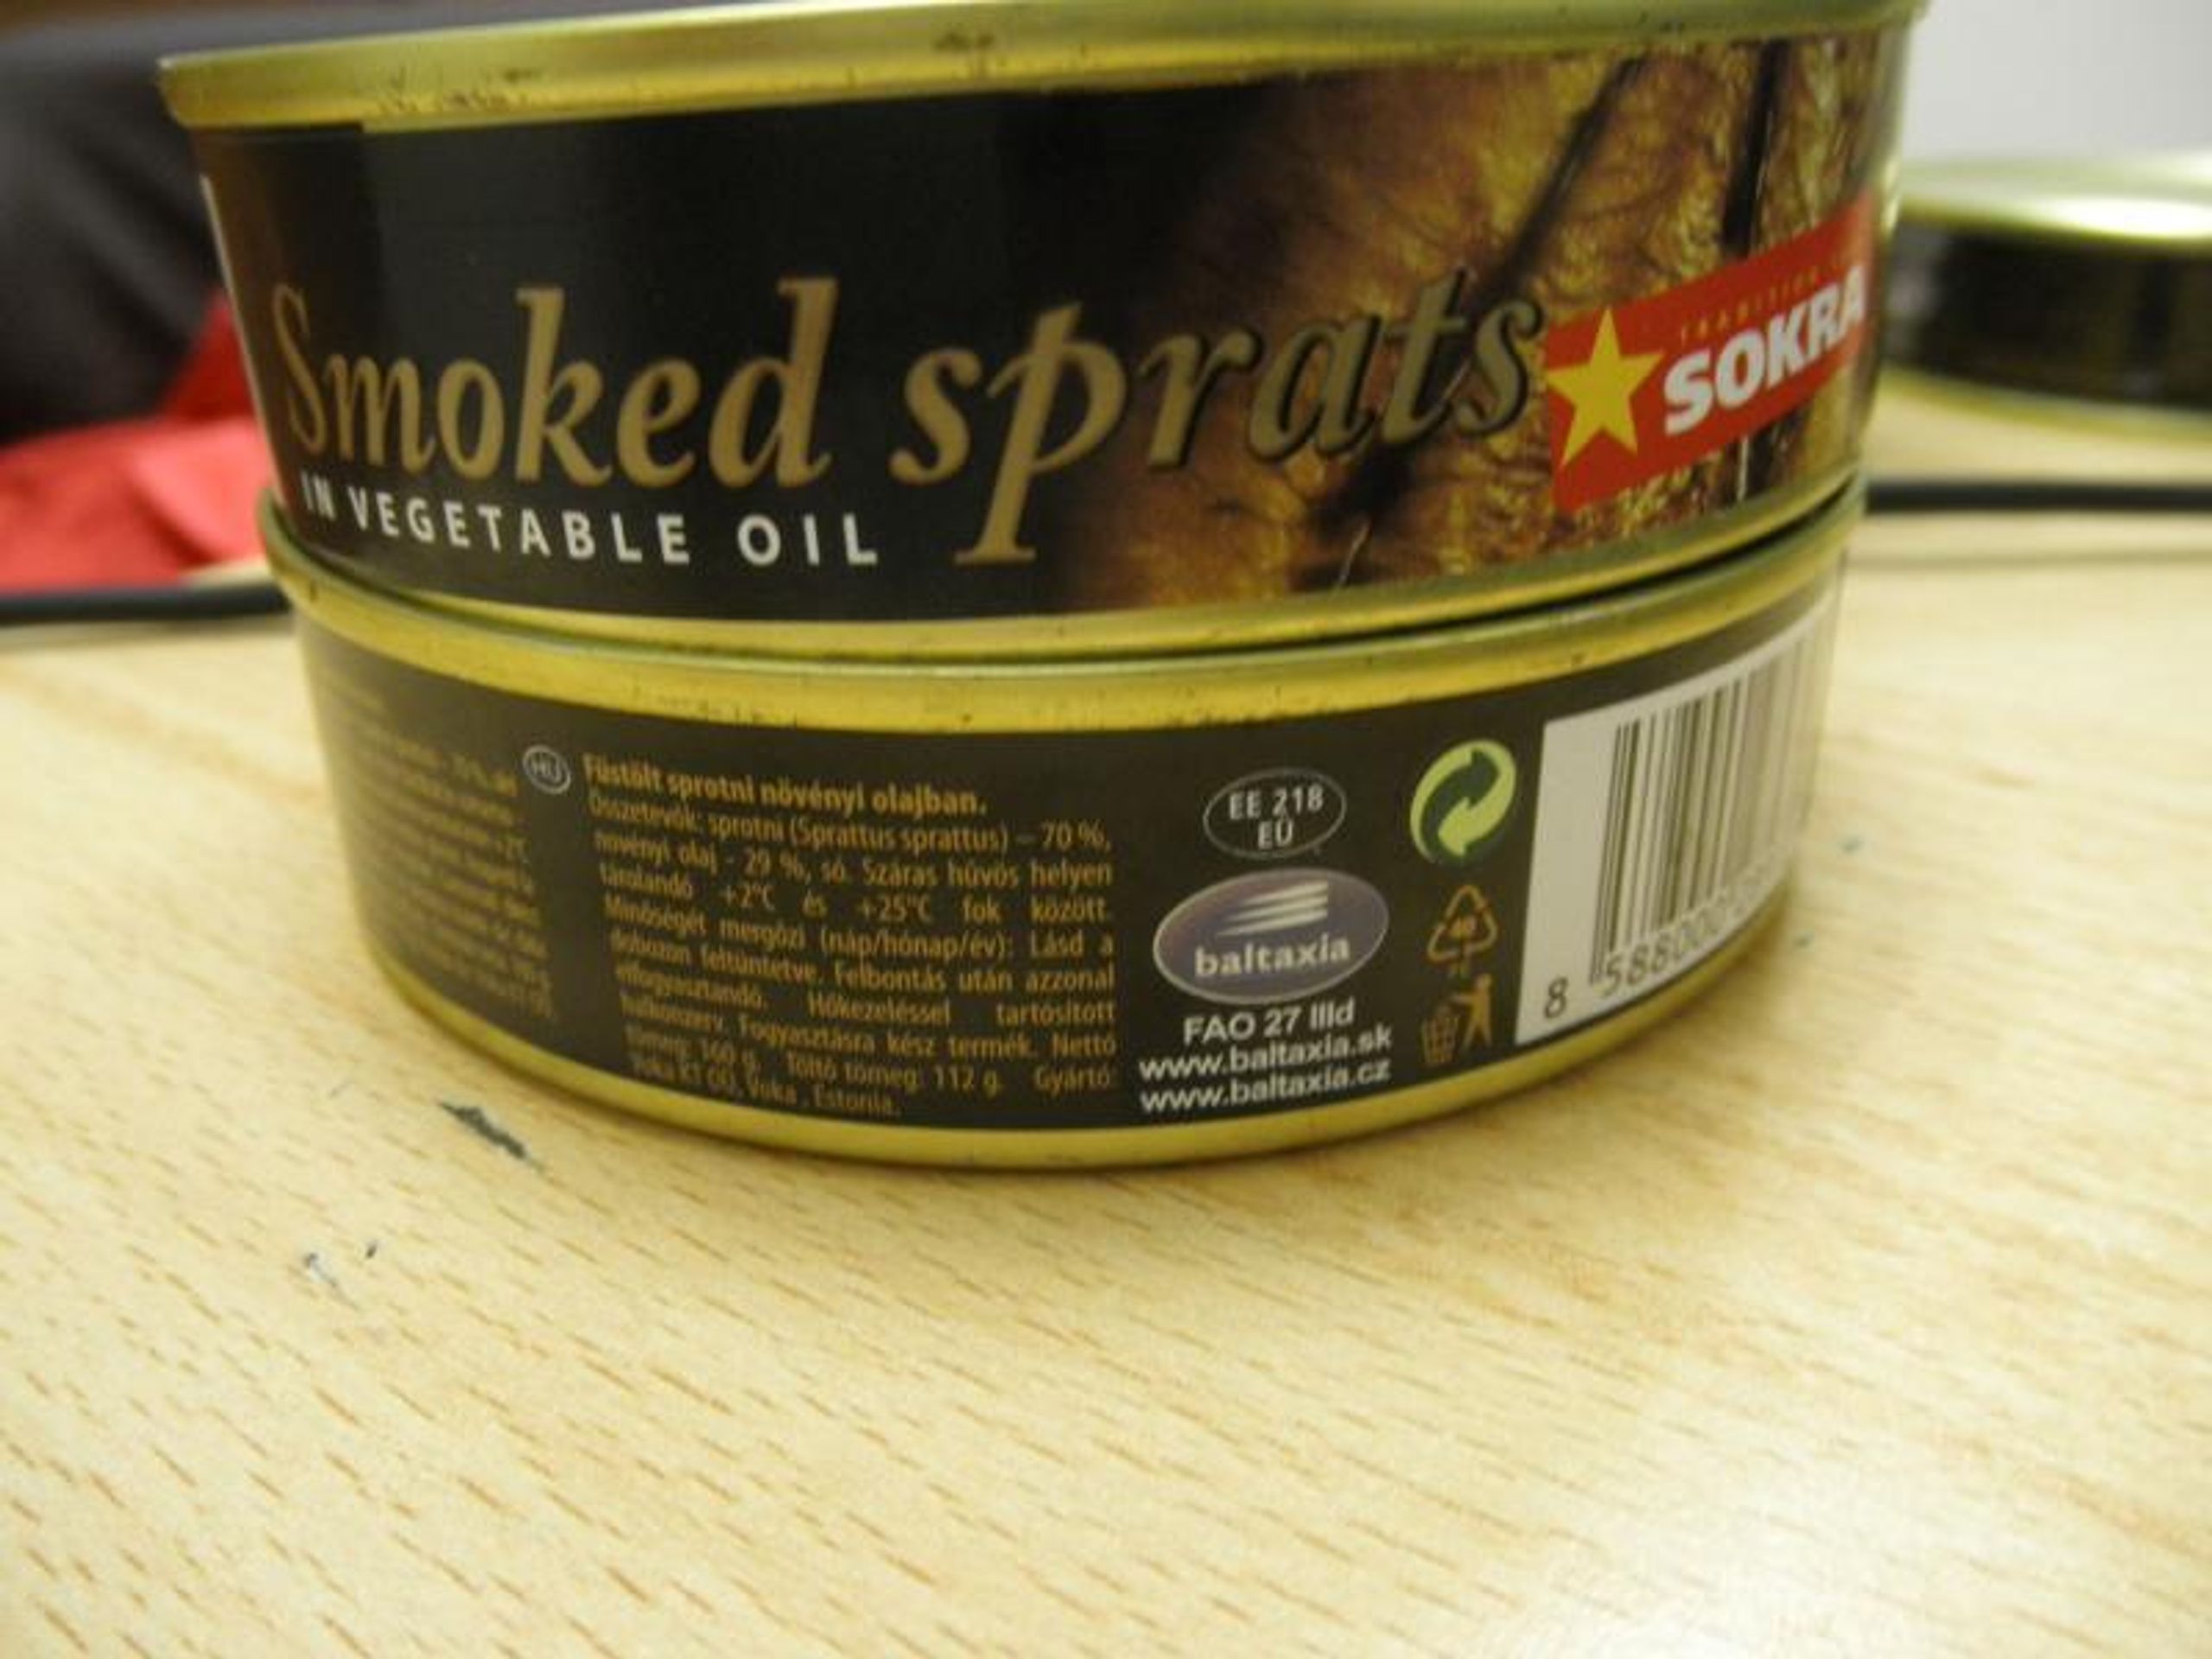 Uzené šproty v oleji od firmy SOKRA - 4 - Galerie: Rybičky s karcinogenními látkami (1/4)